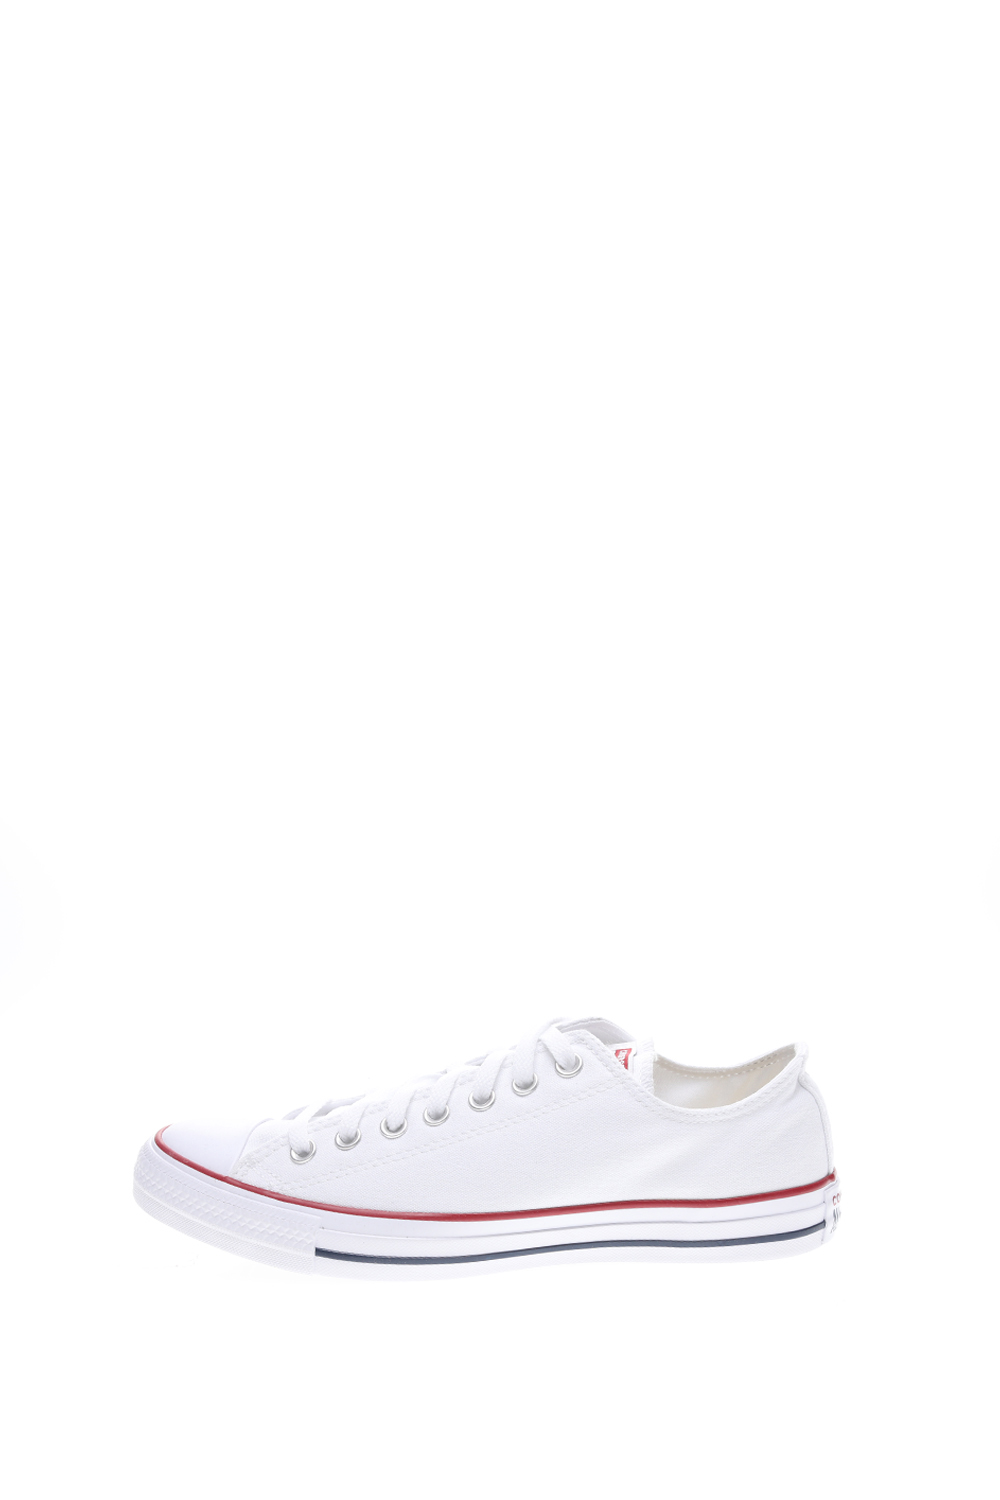 CONVERSE – Unisex παπούτσια Chuck Taylor λευκά